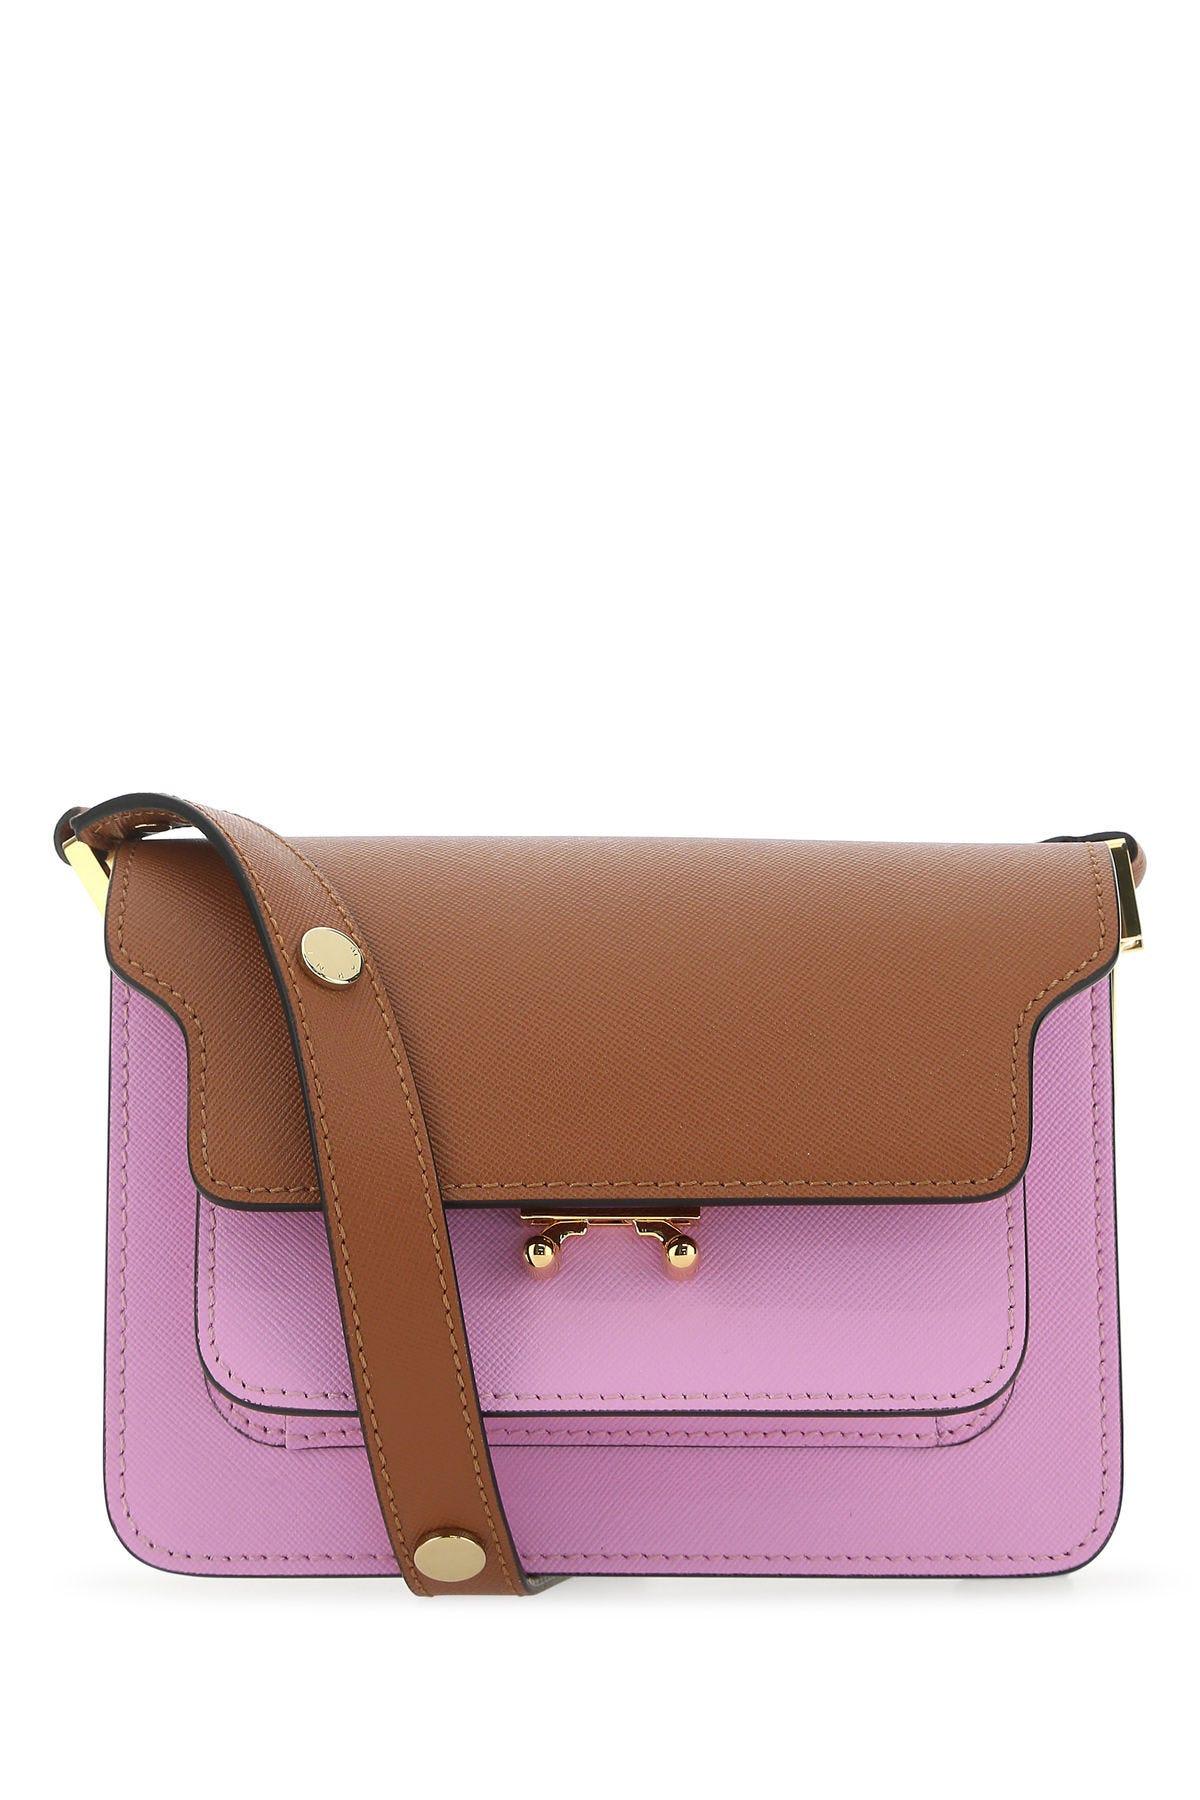 Marni Multicolor Leather Mini Trunk Shoulder Bag